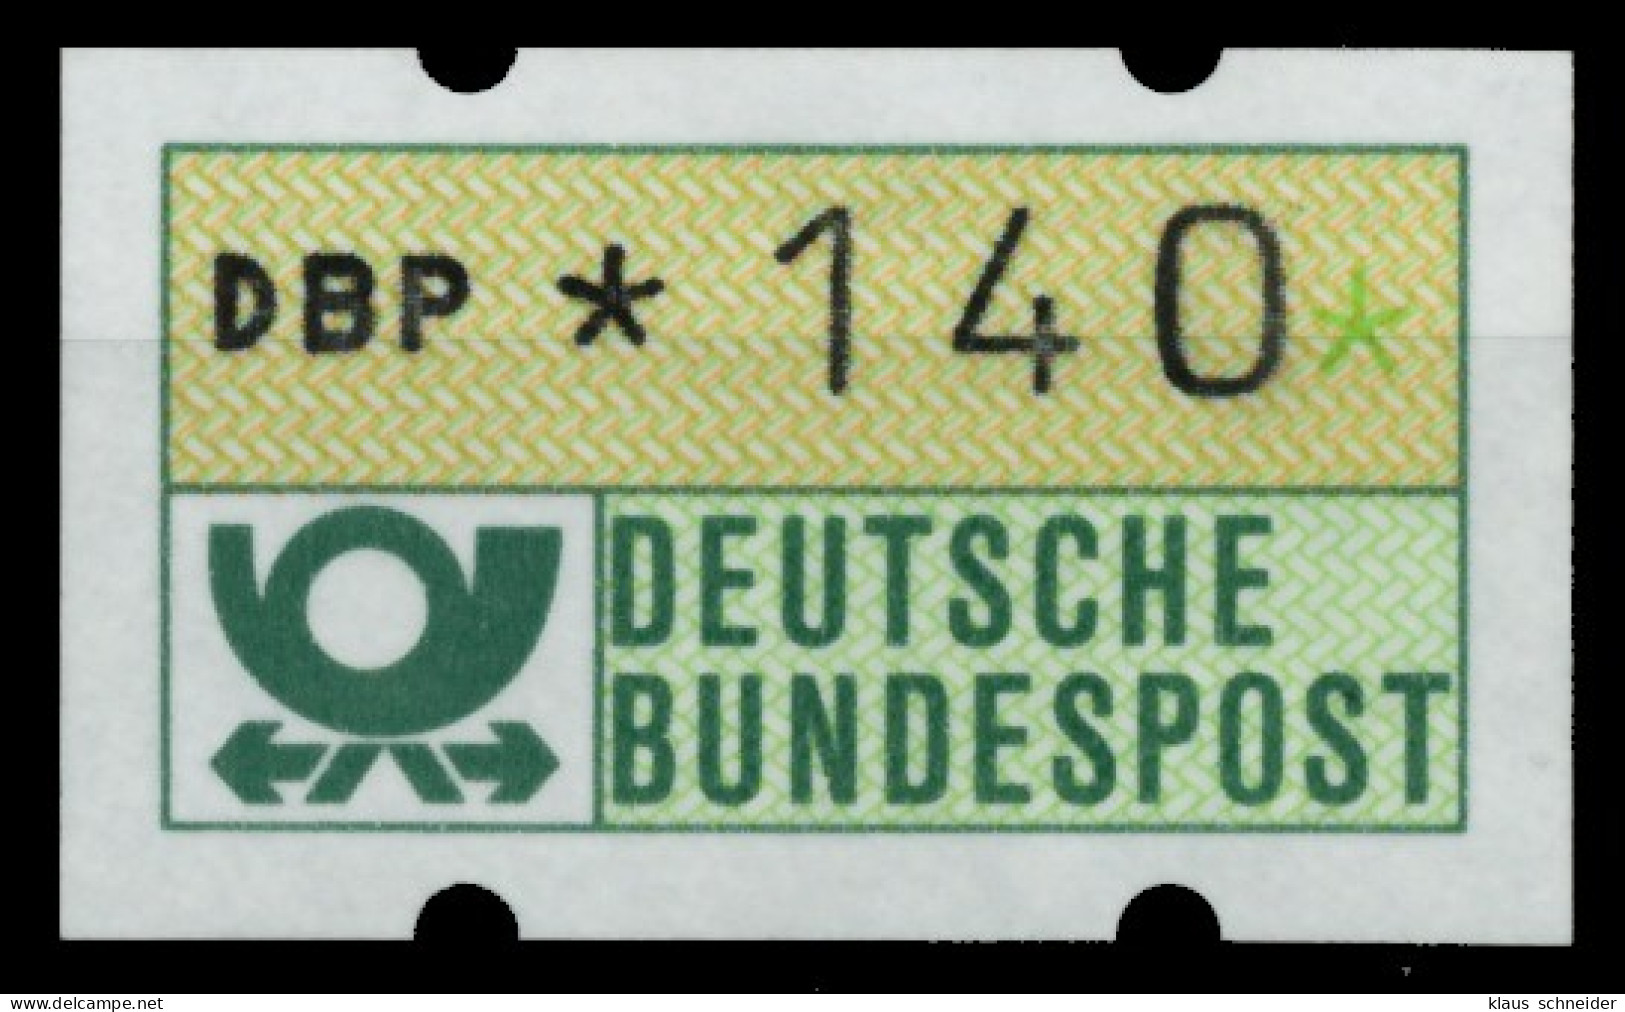 BRD ATM 1981 Nr 1-2-140 Postfrisch X754C1E - Machine Labels [ATM]